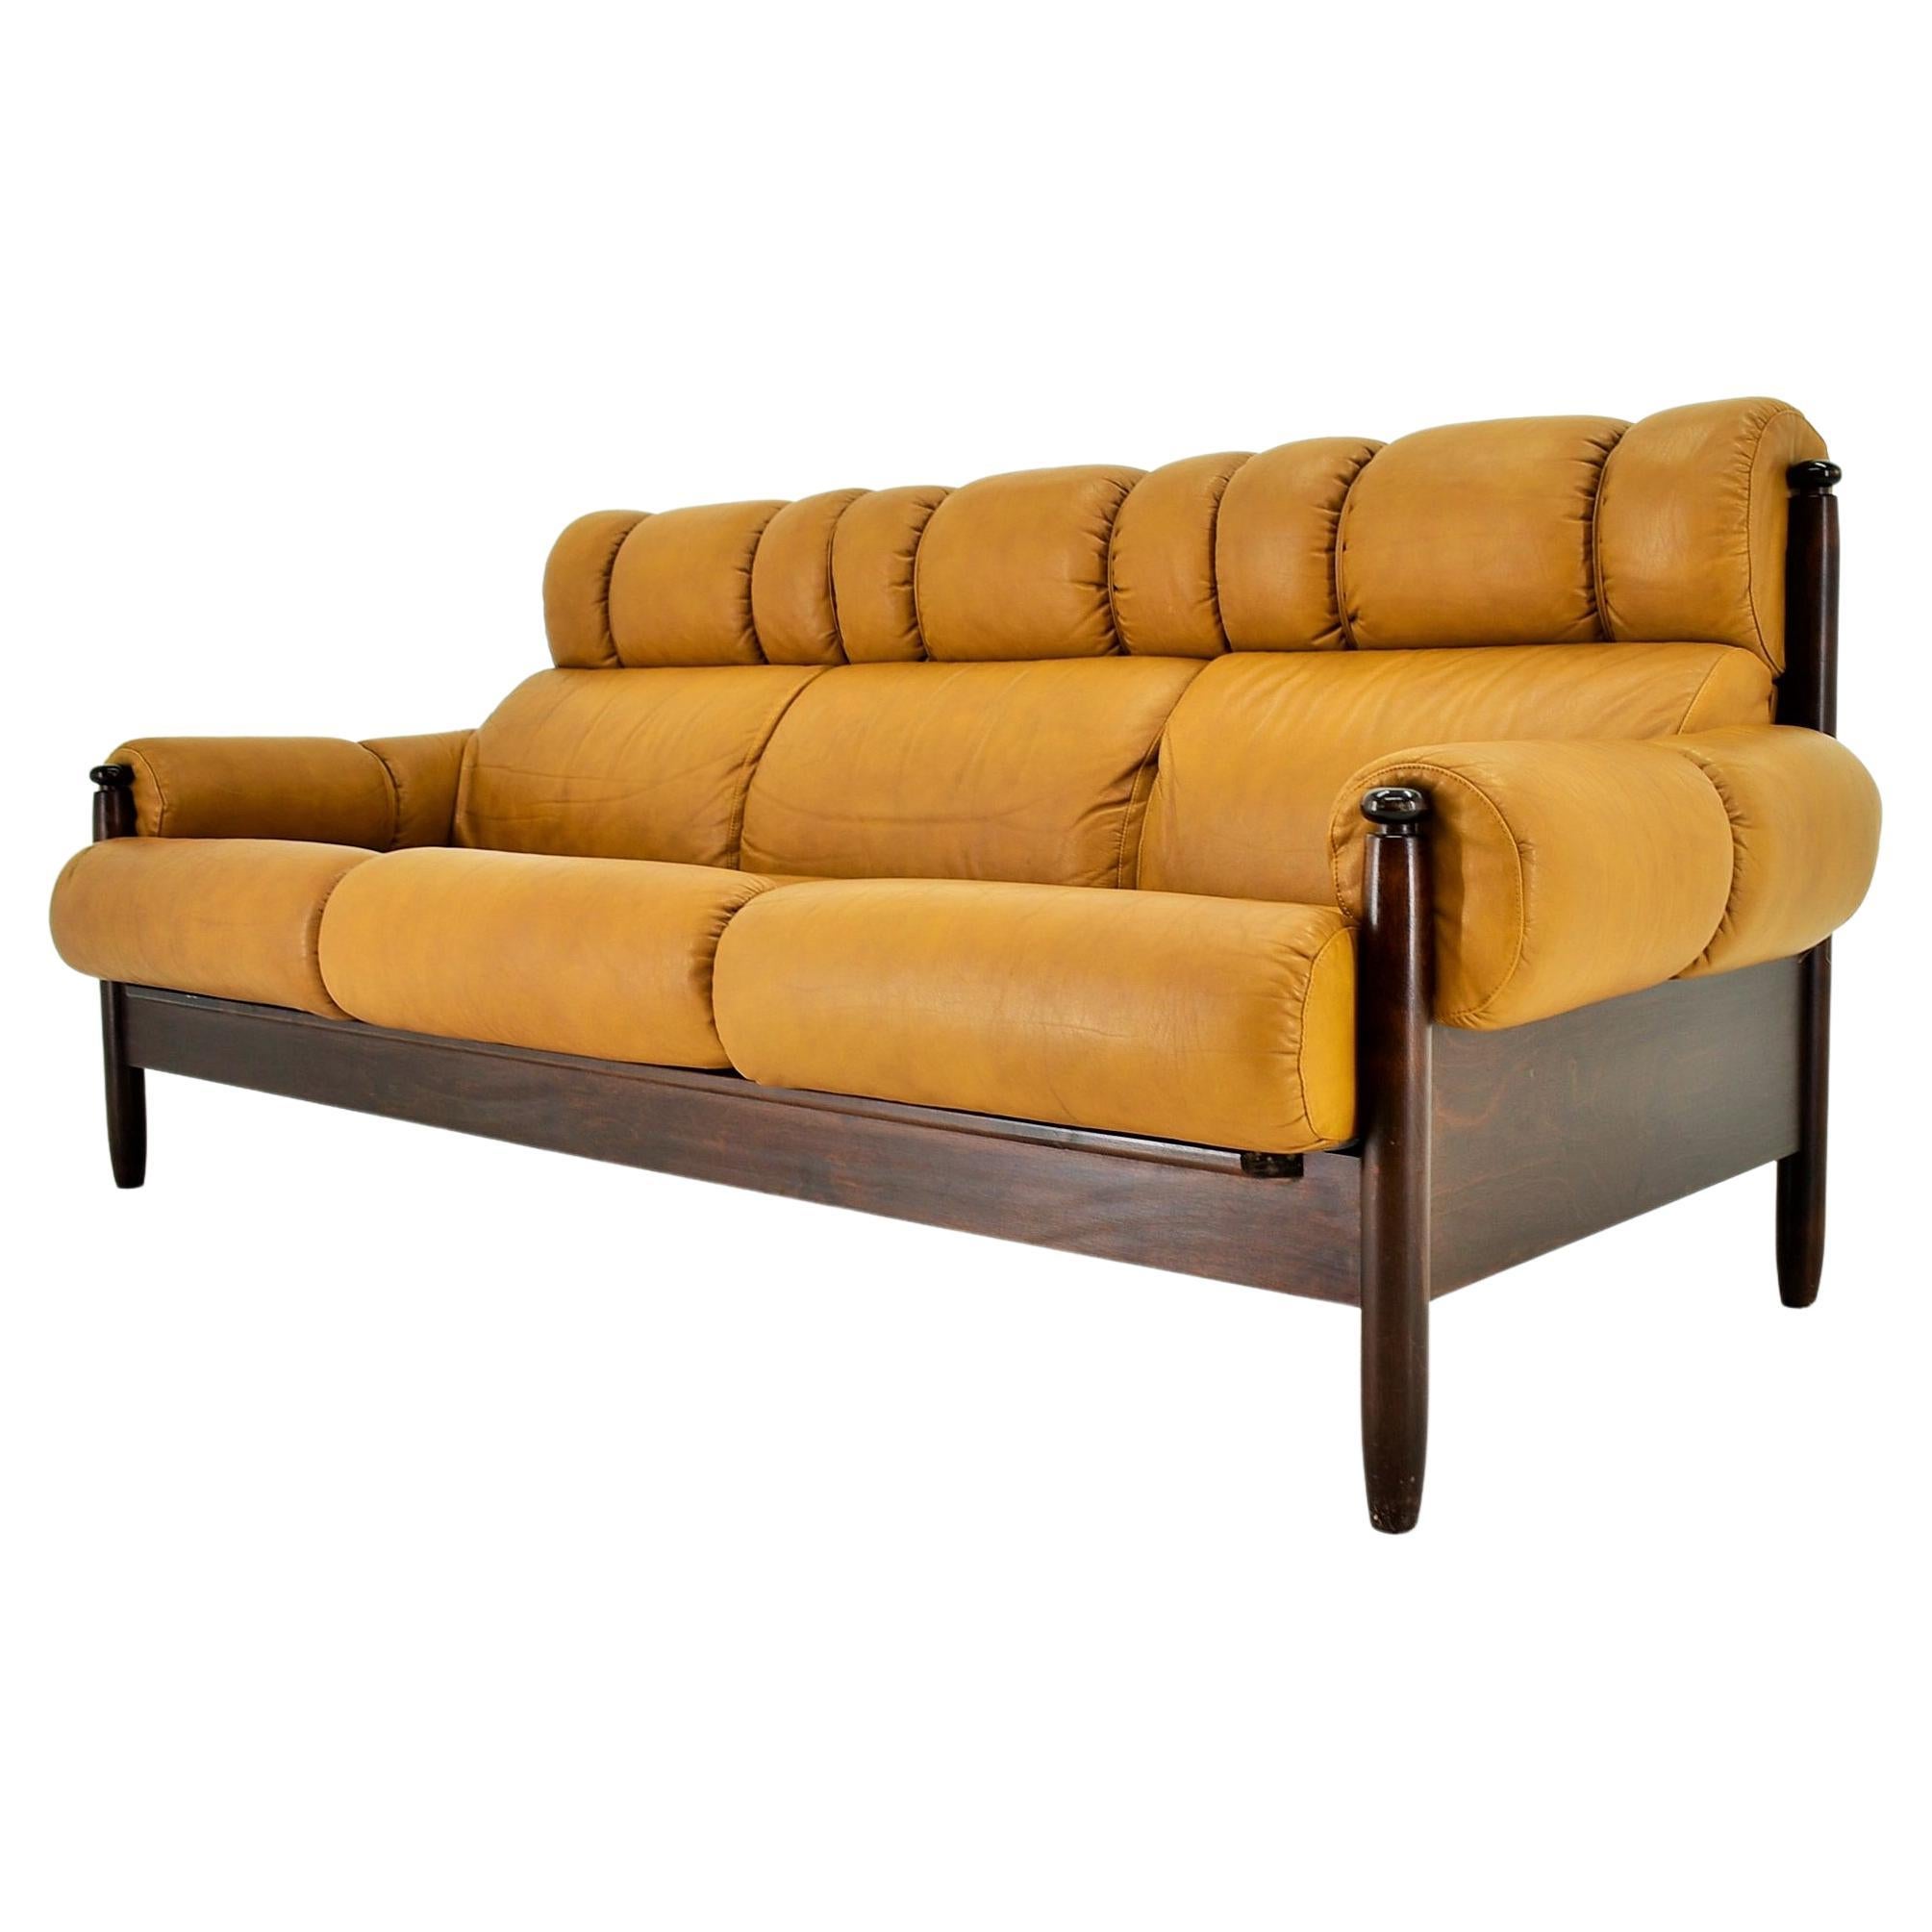 1960s Three-Seat Leather Sofa, Czechoslovakia For Sale